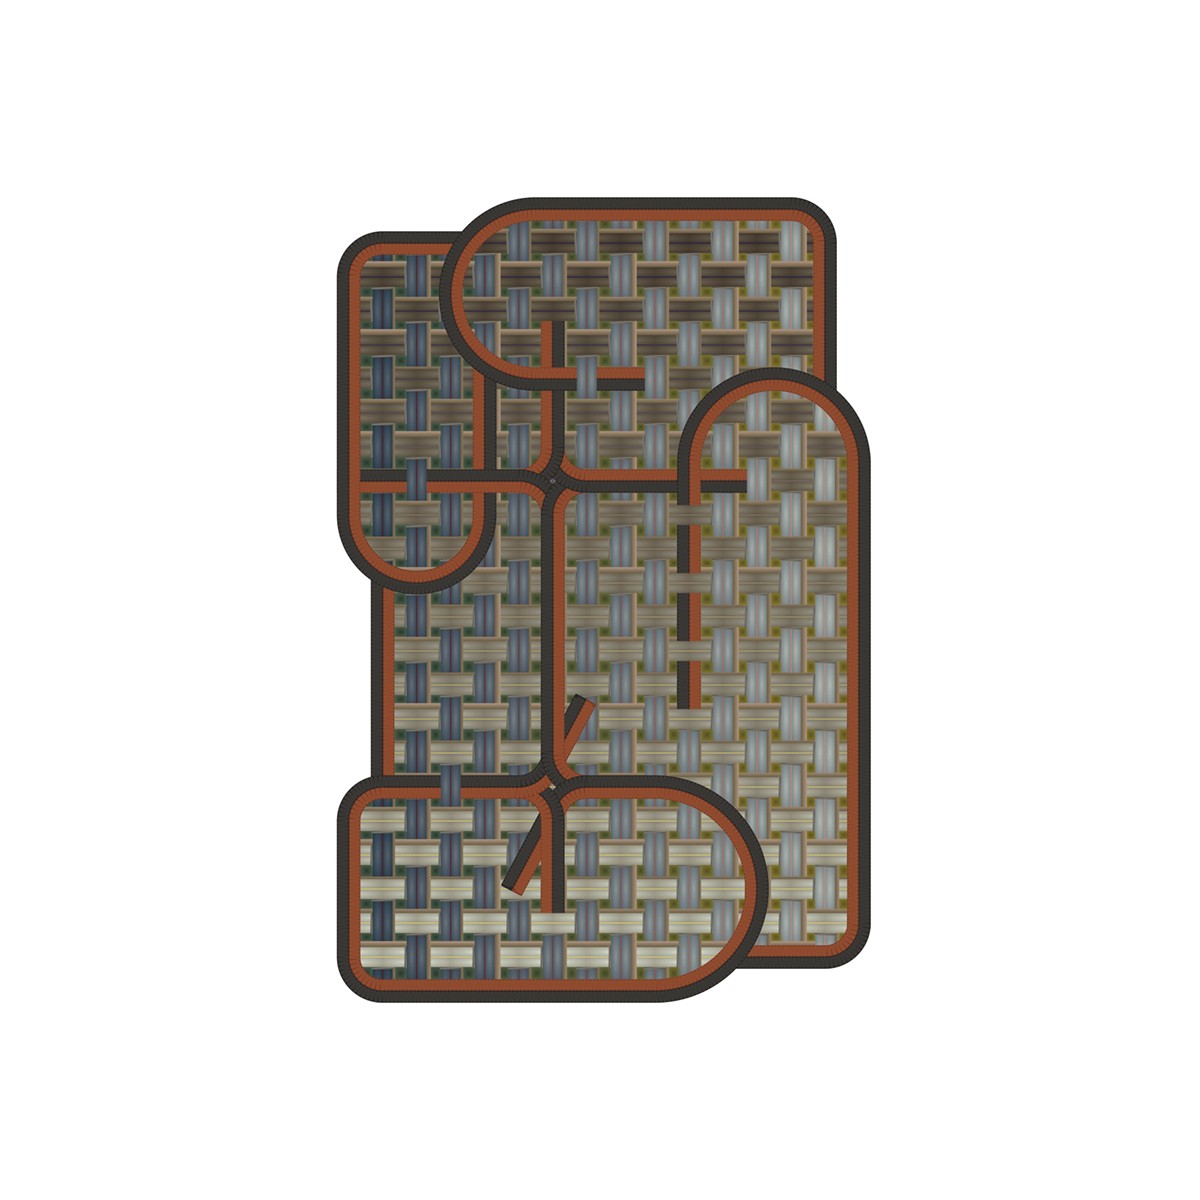 Tangle Menjangan rug - 296 x 392 cm - Yarn Box